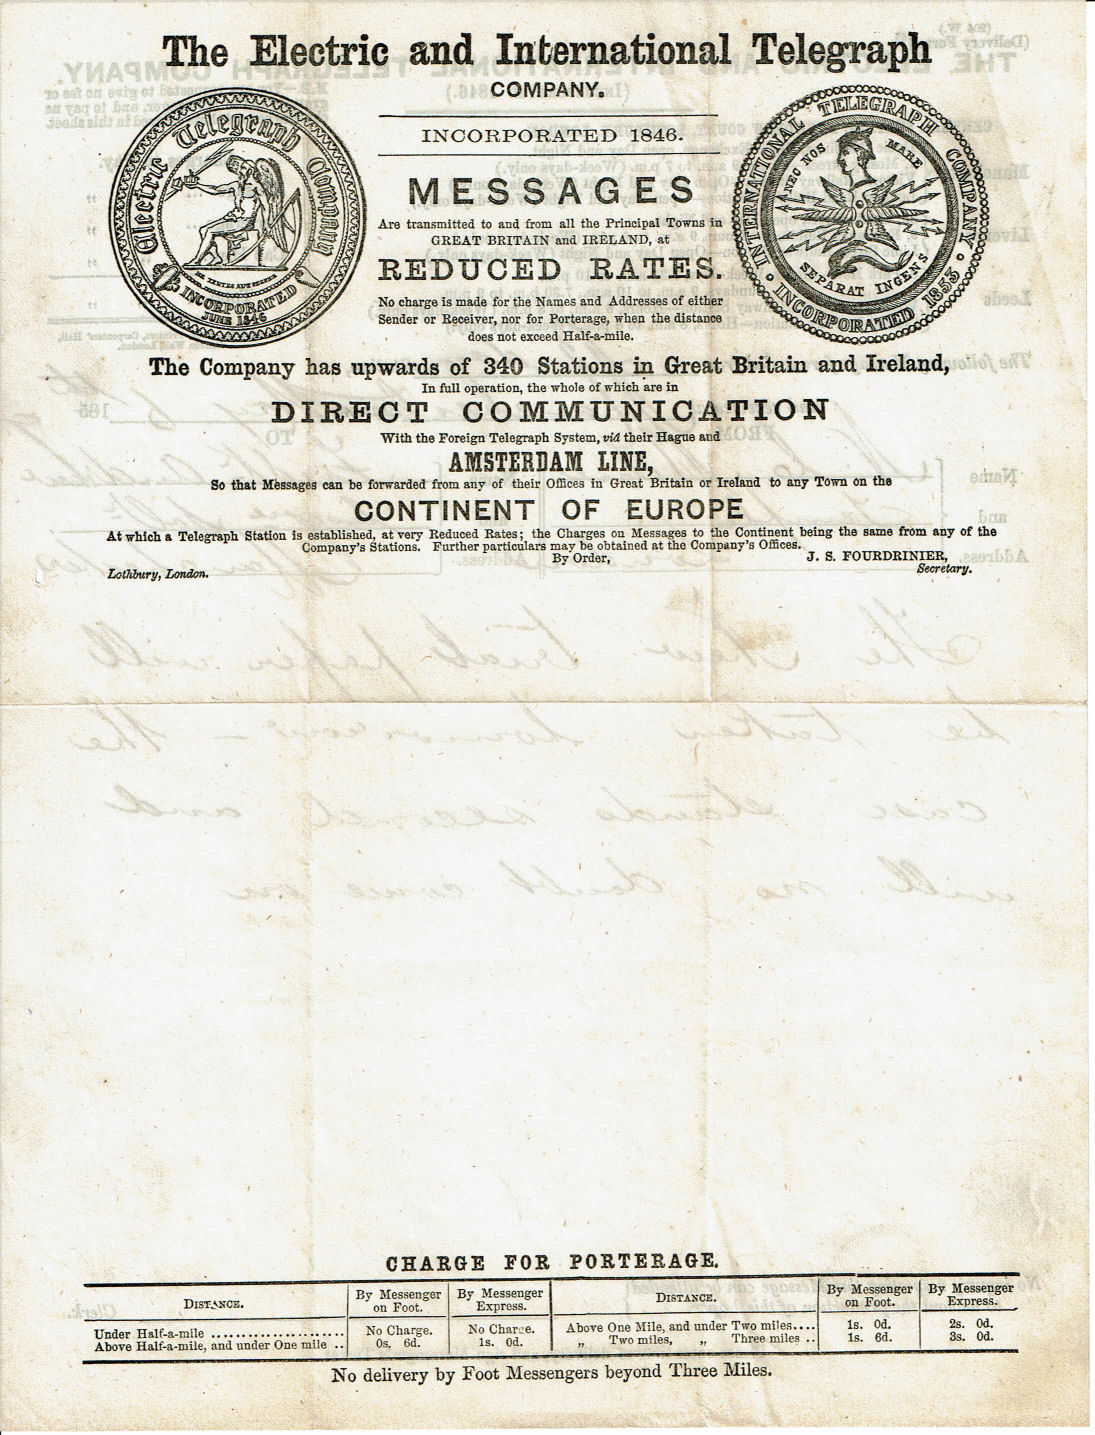 Electric Telegraph Company Form C 1859 - back.